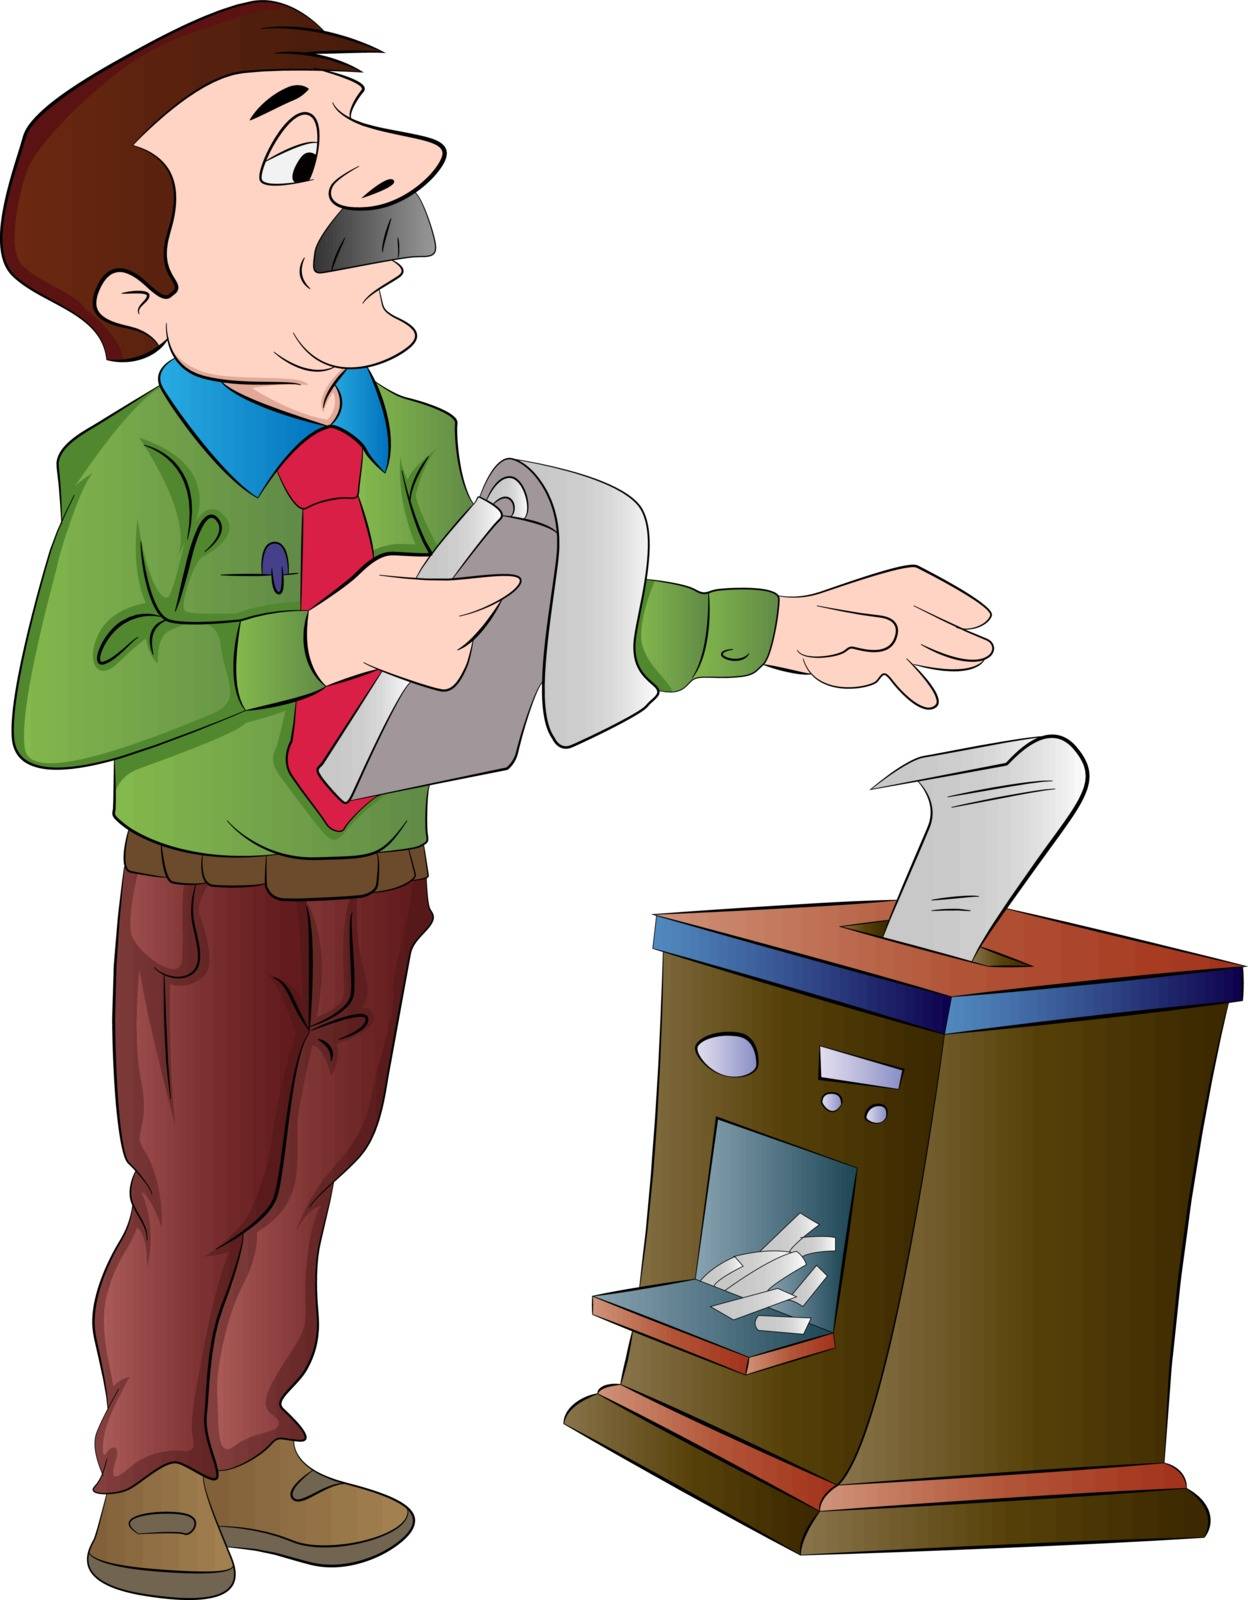 Man Shredding Documents, vector illustration